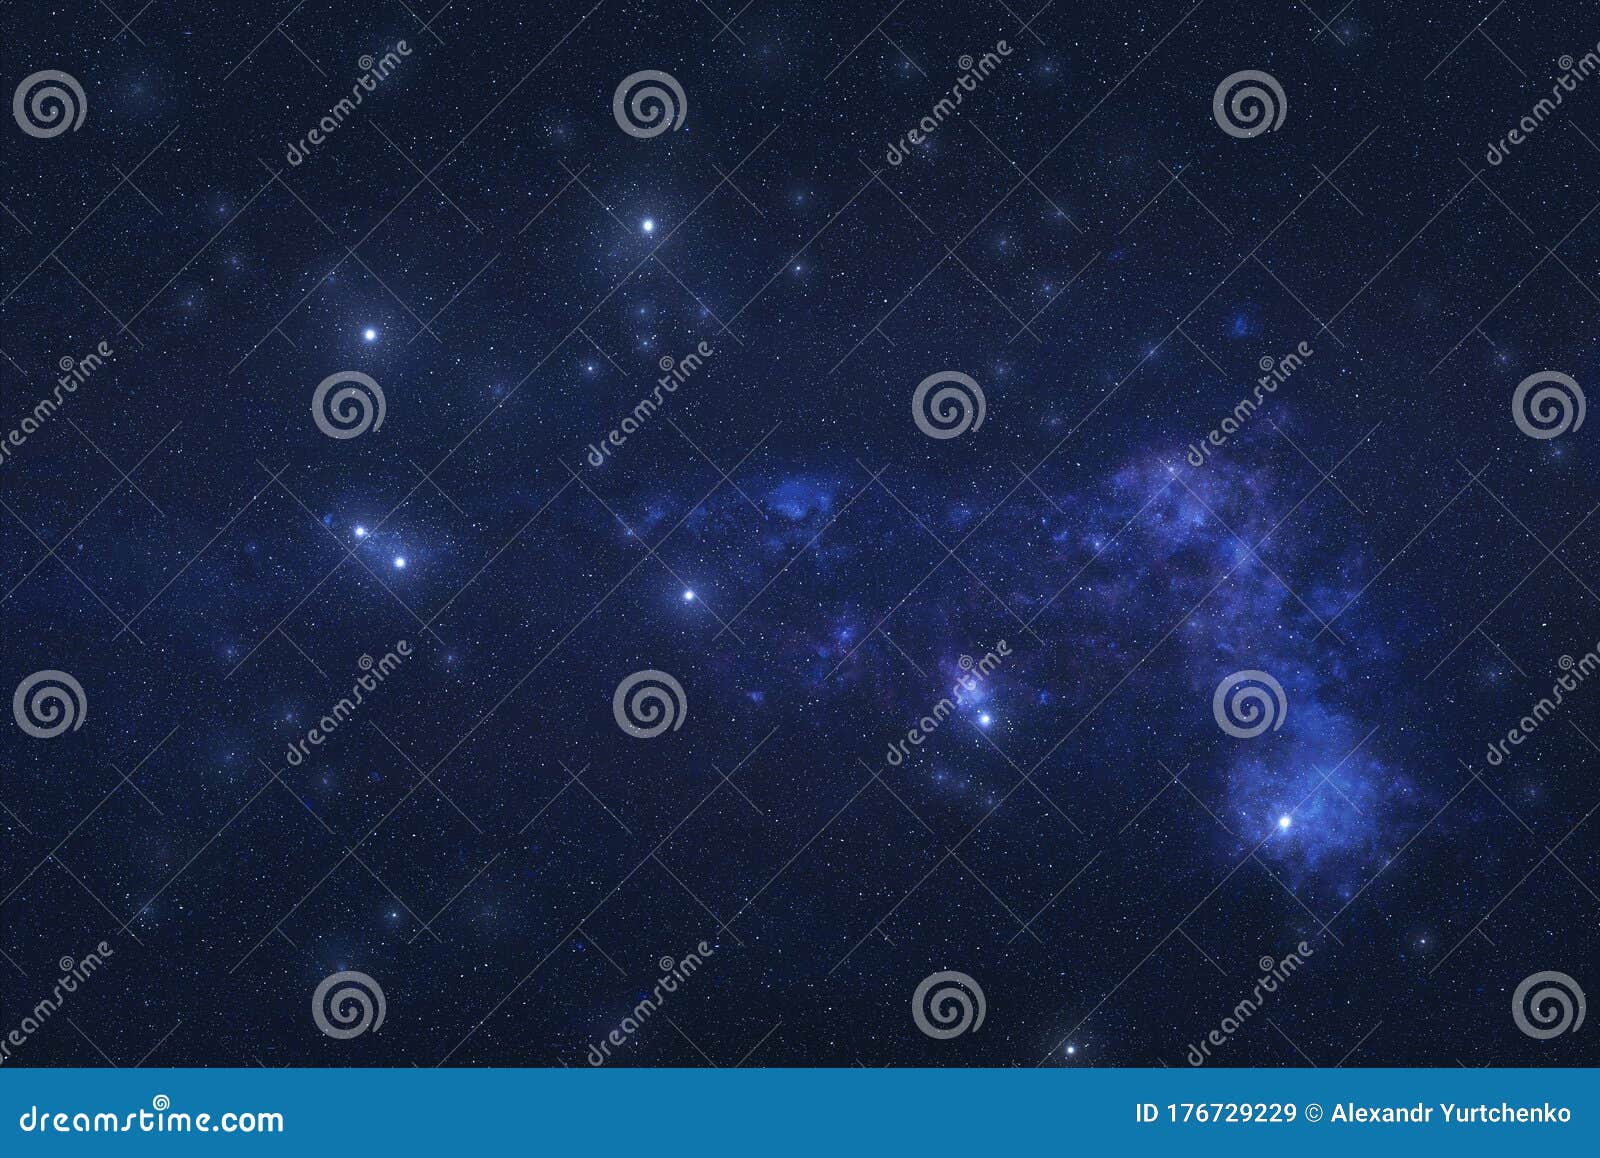 piscis austrinus constellation in outer space.